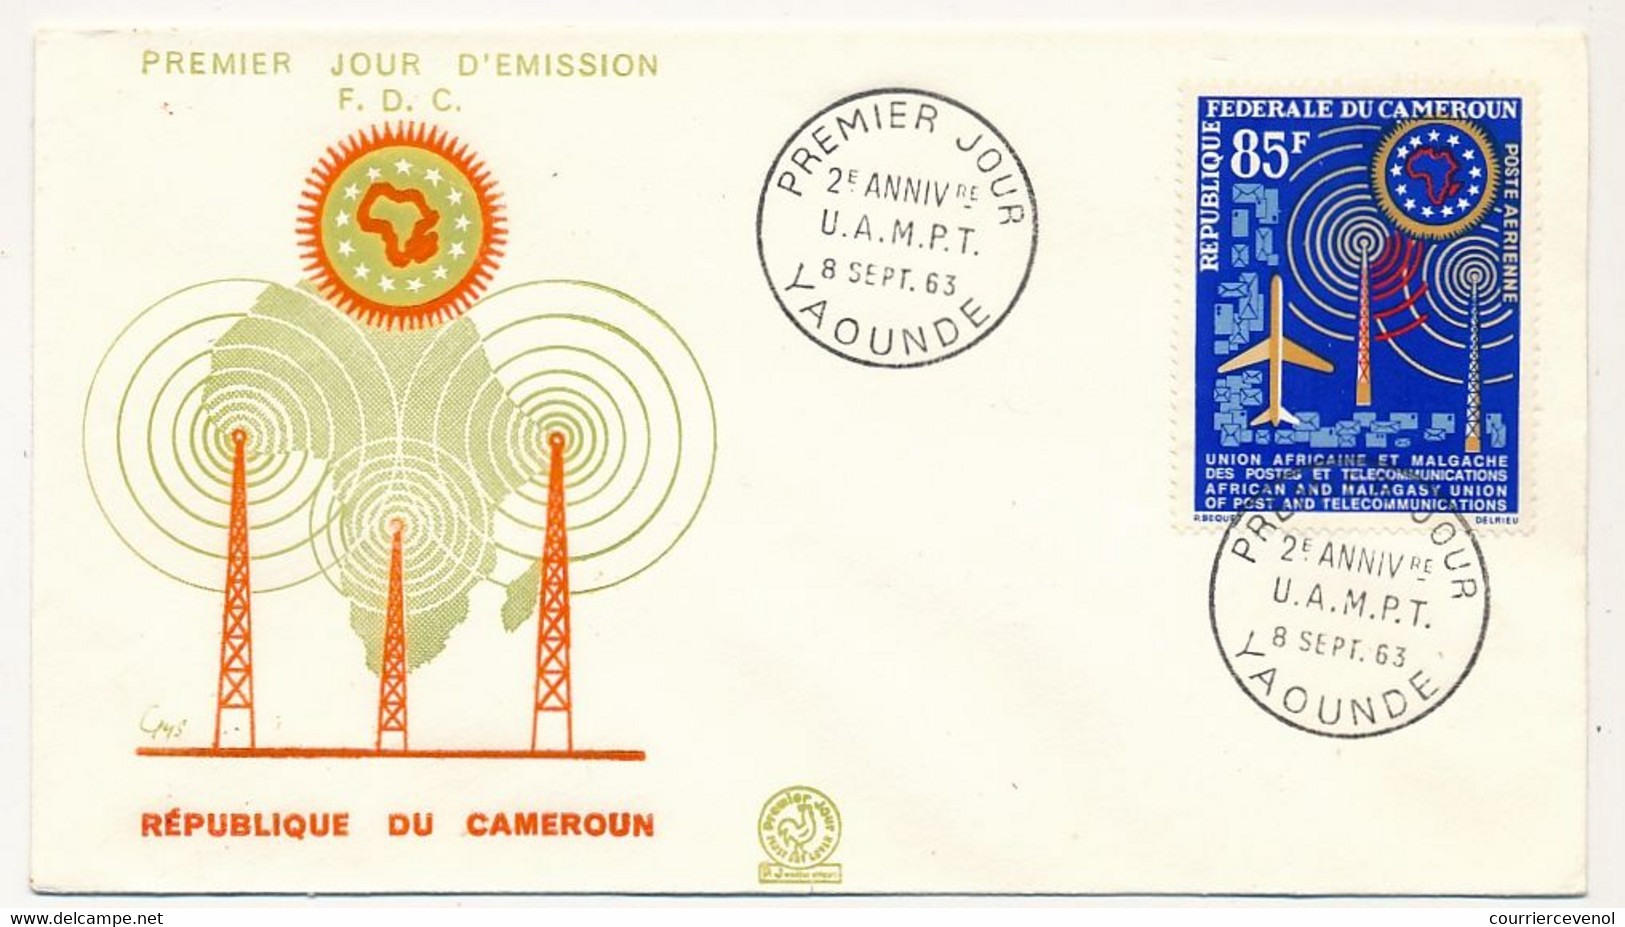 CAMEROUN => Enveloppe FDC - 85F 2eme Anniversaire UAMPT - 8 Sept 1983 - Yaoundé - Camerún (1960-...)